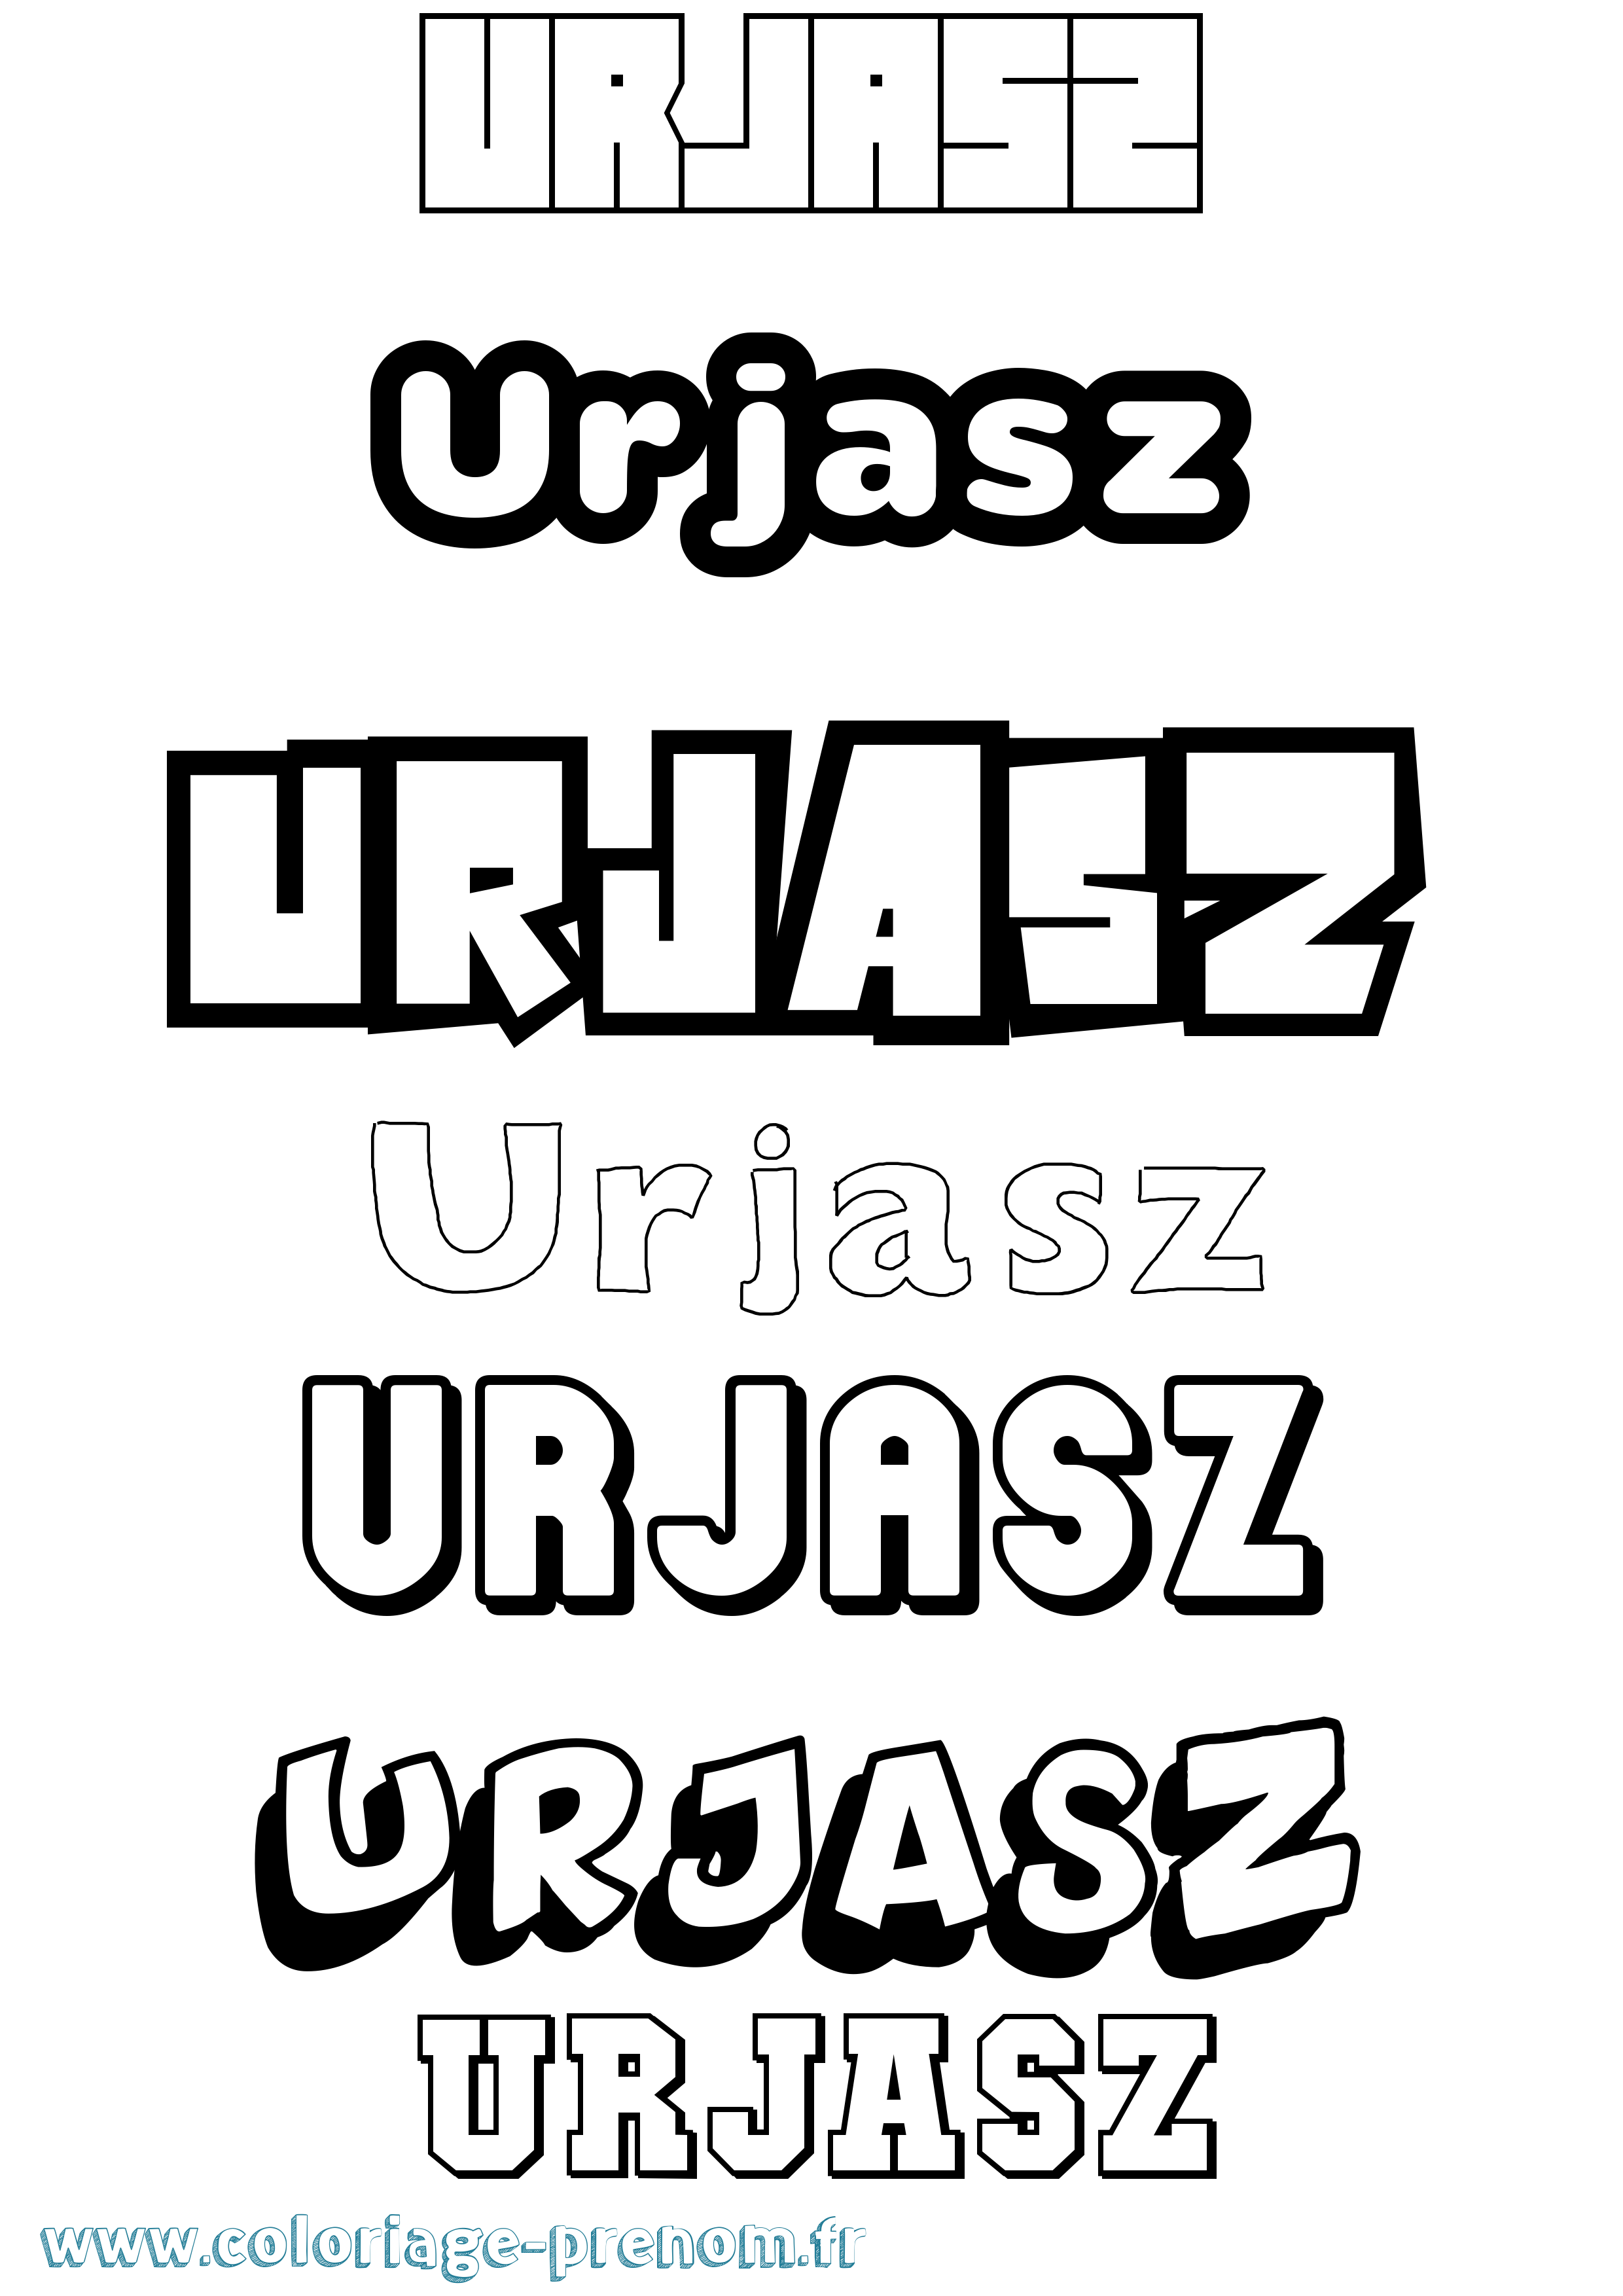 Coloriage prénom Urjasz Simple